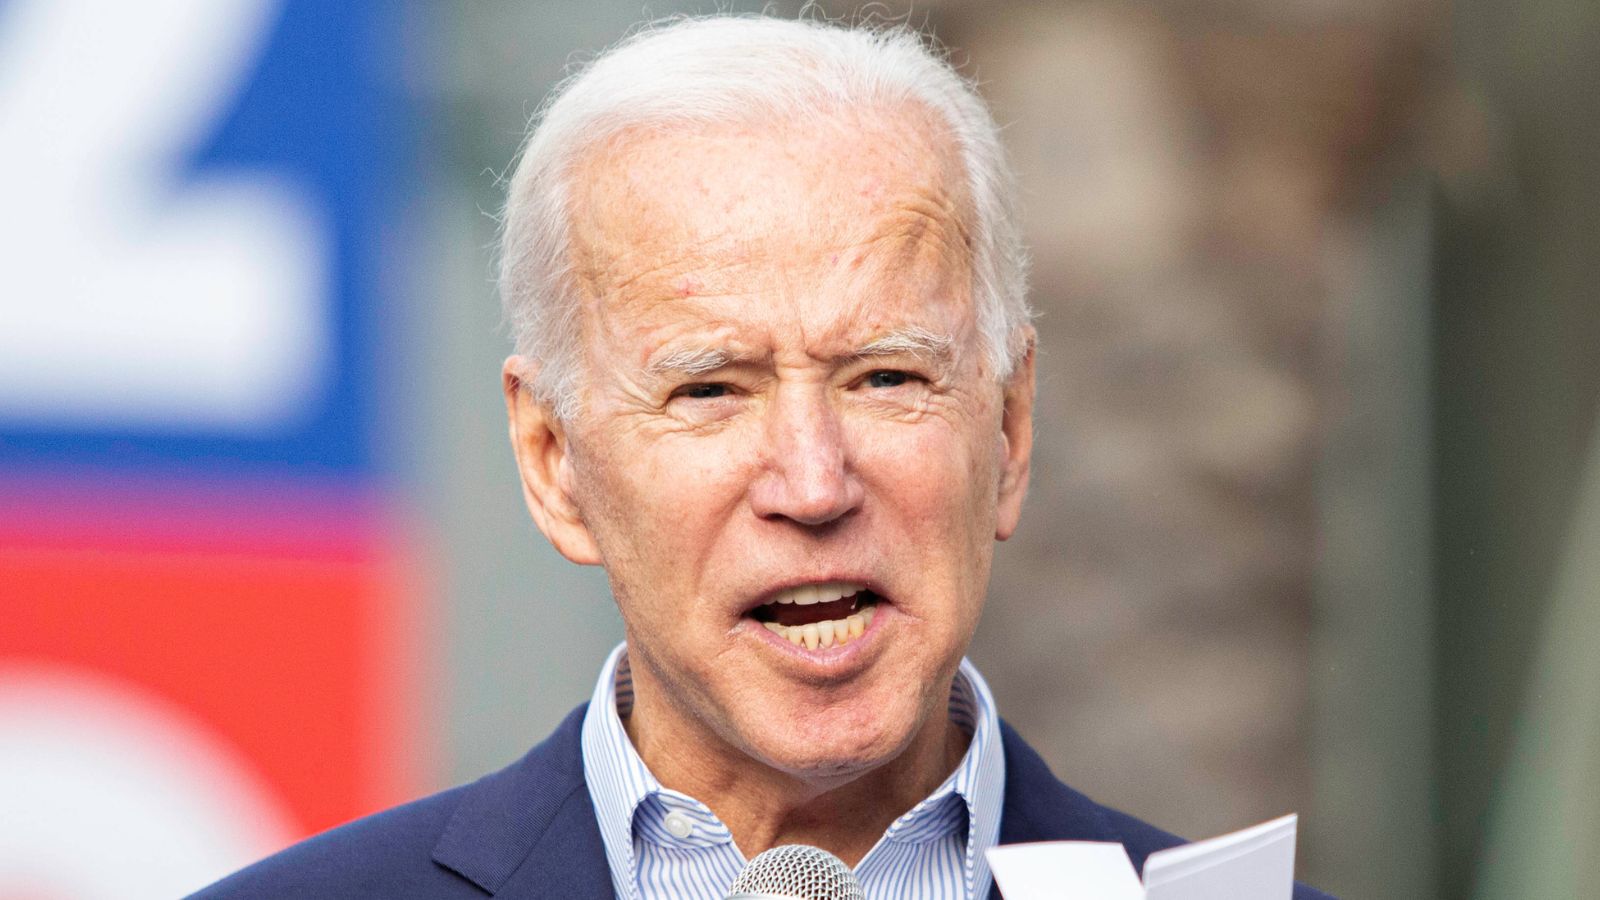 “Joe Biden Is the Worst POTUS Ever”: Voters Are Furious Over Biden’s New Policies and Economic Turmoil